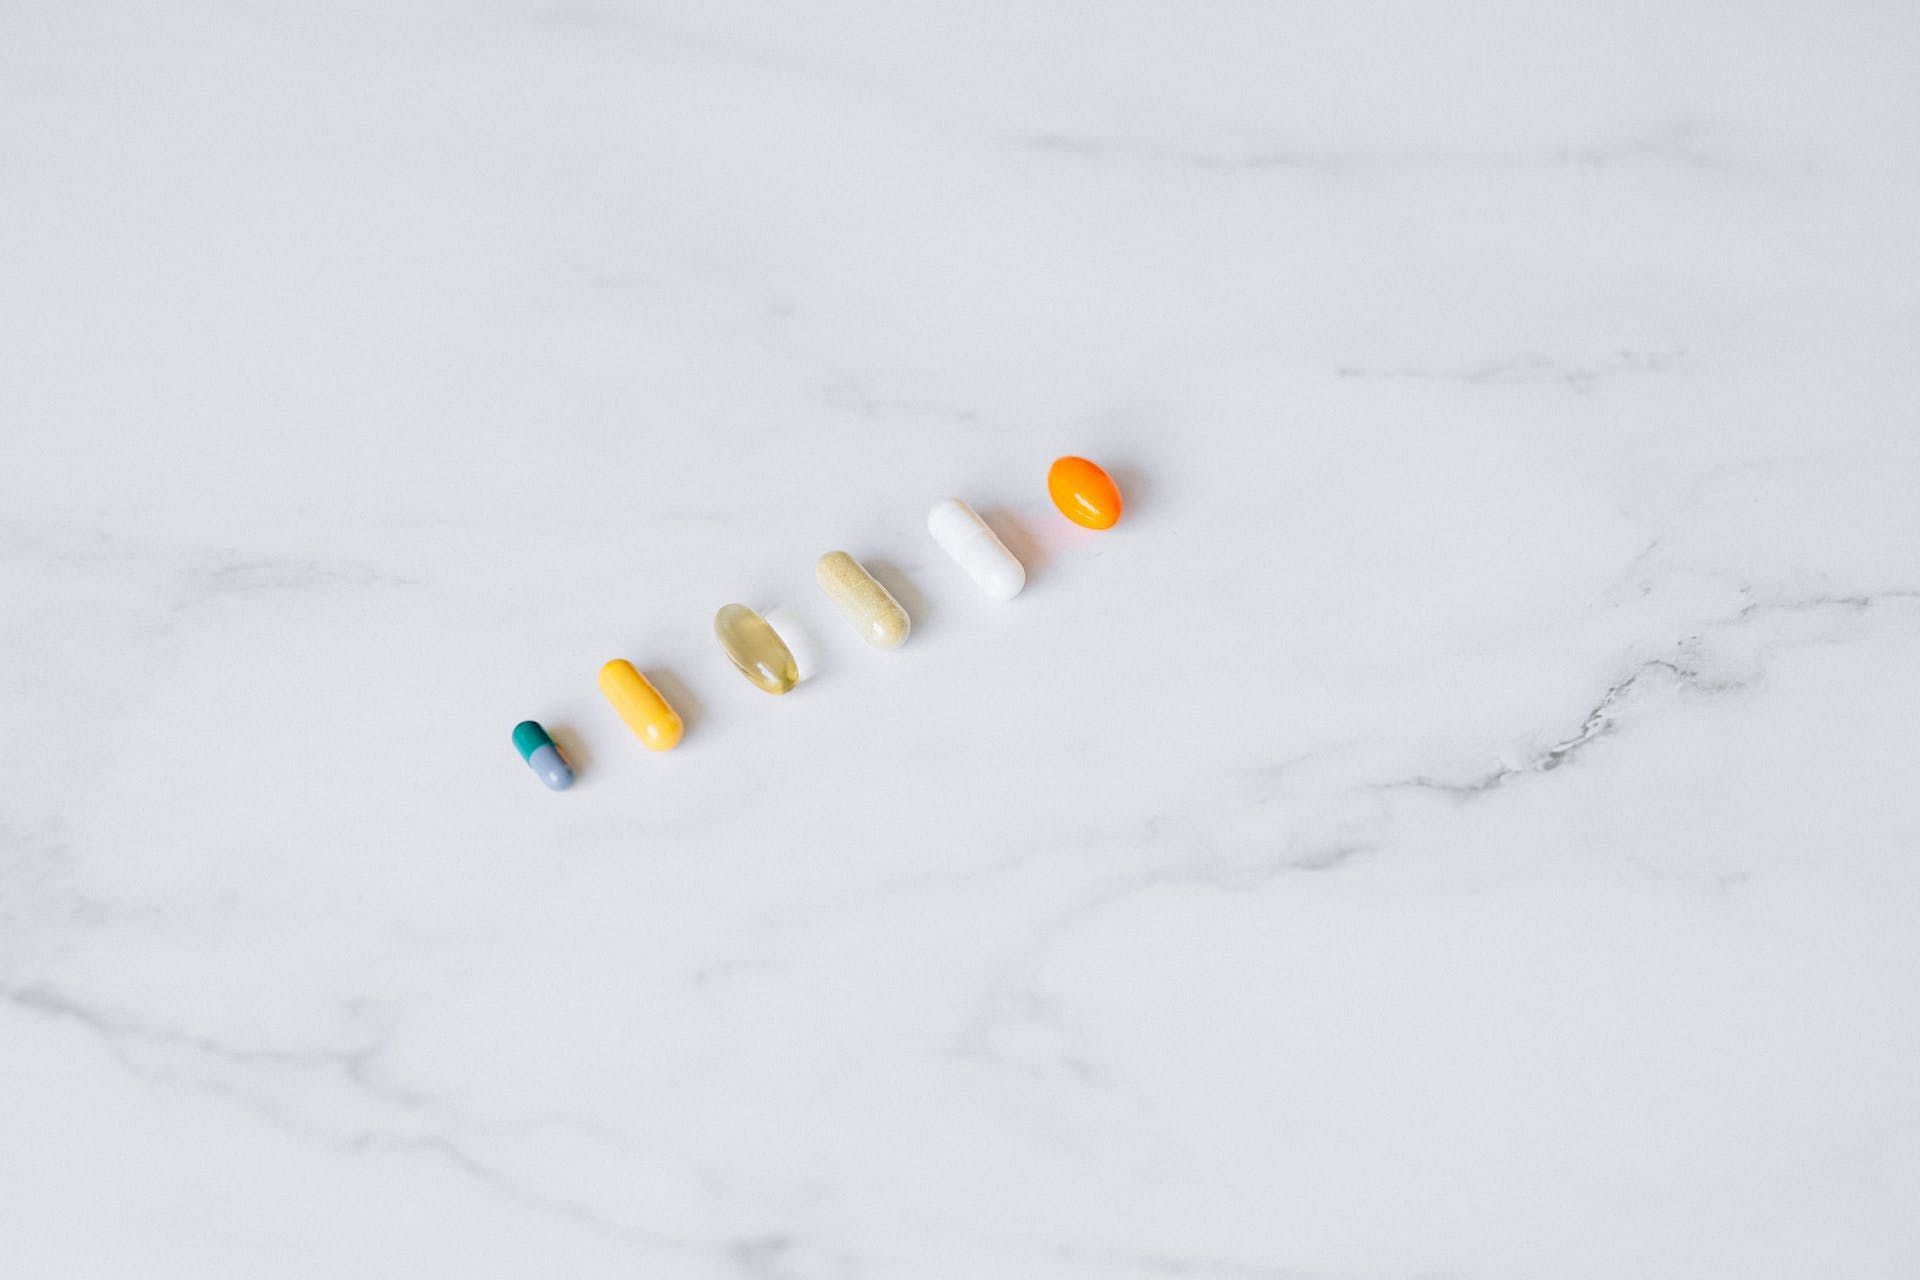 Doctors can prescribe certain medications. (Image via Pexels/Nataliya Vaitkevich)